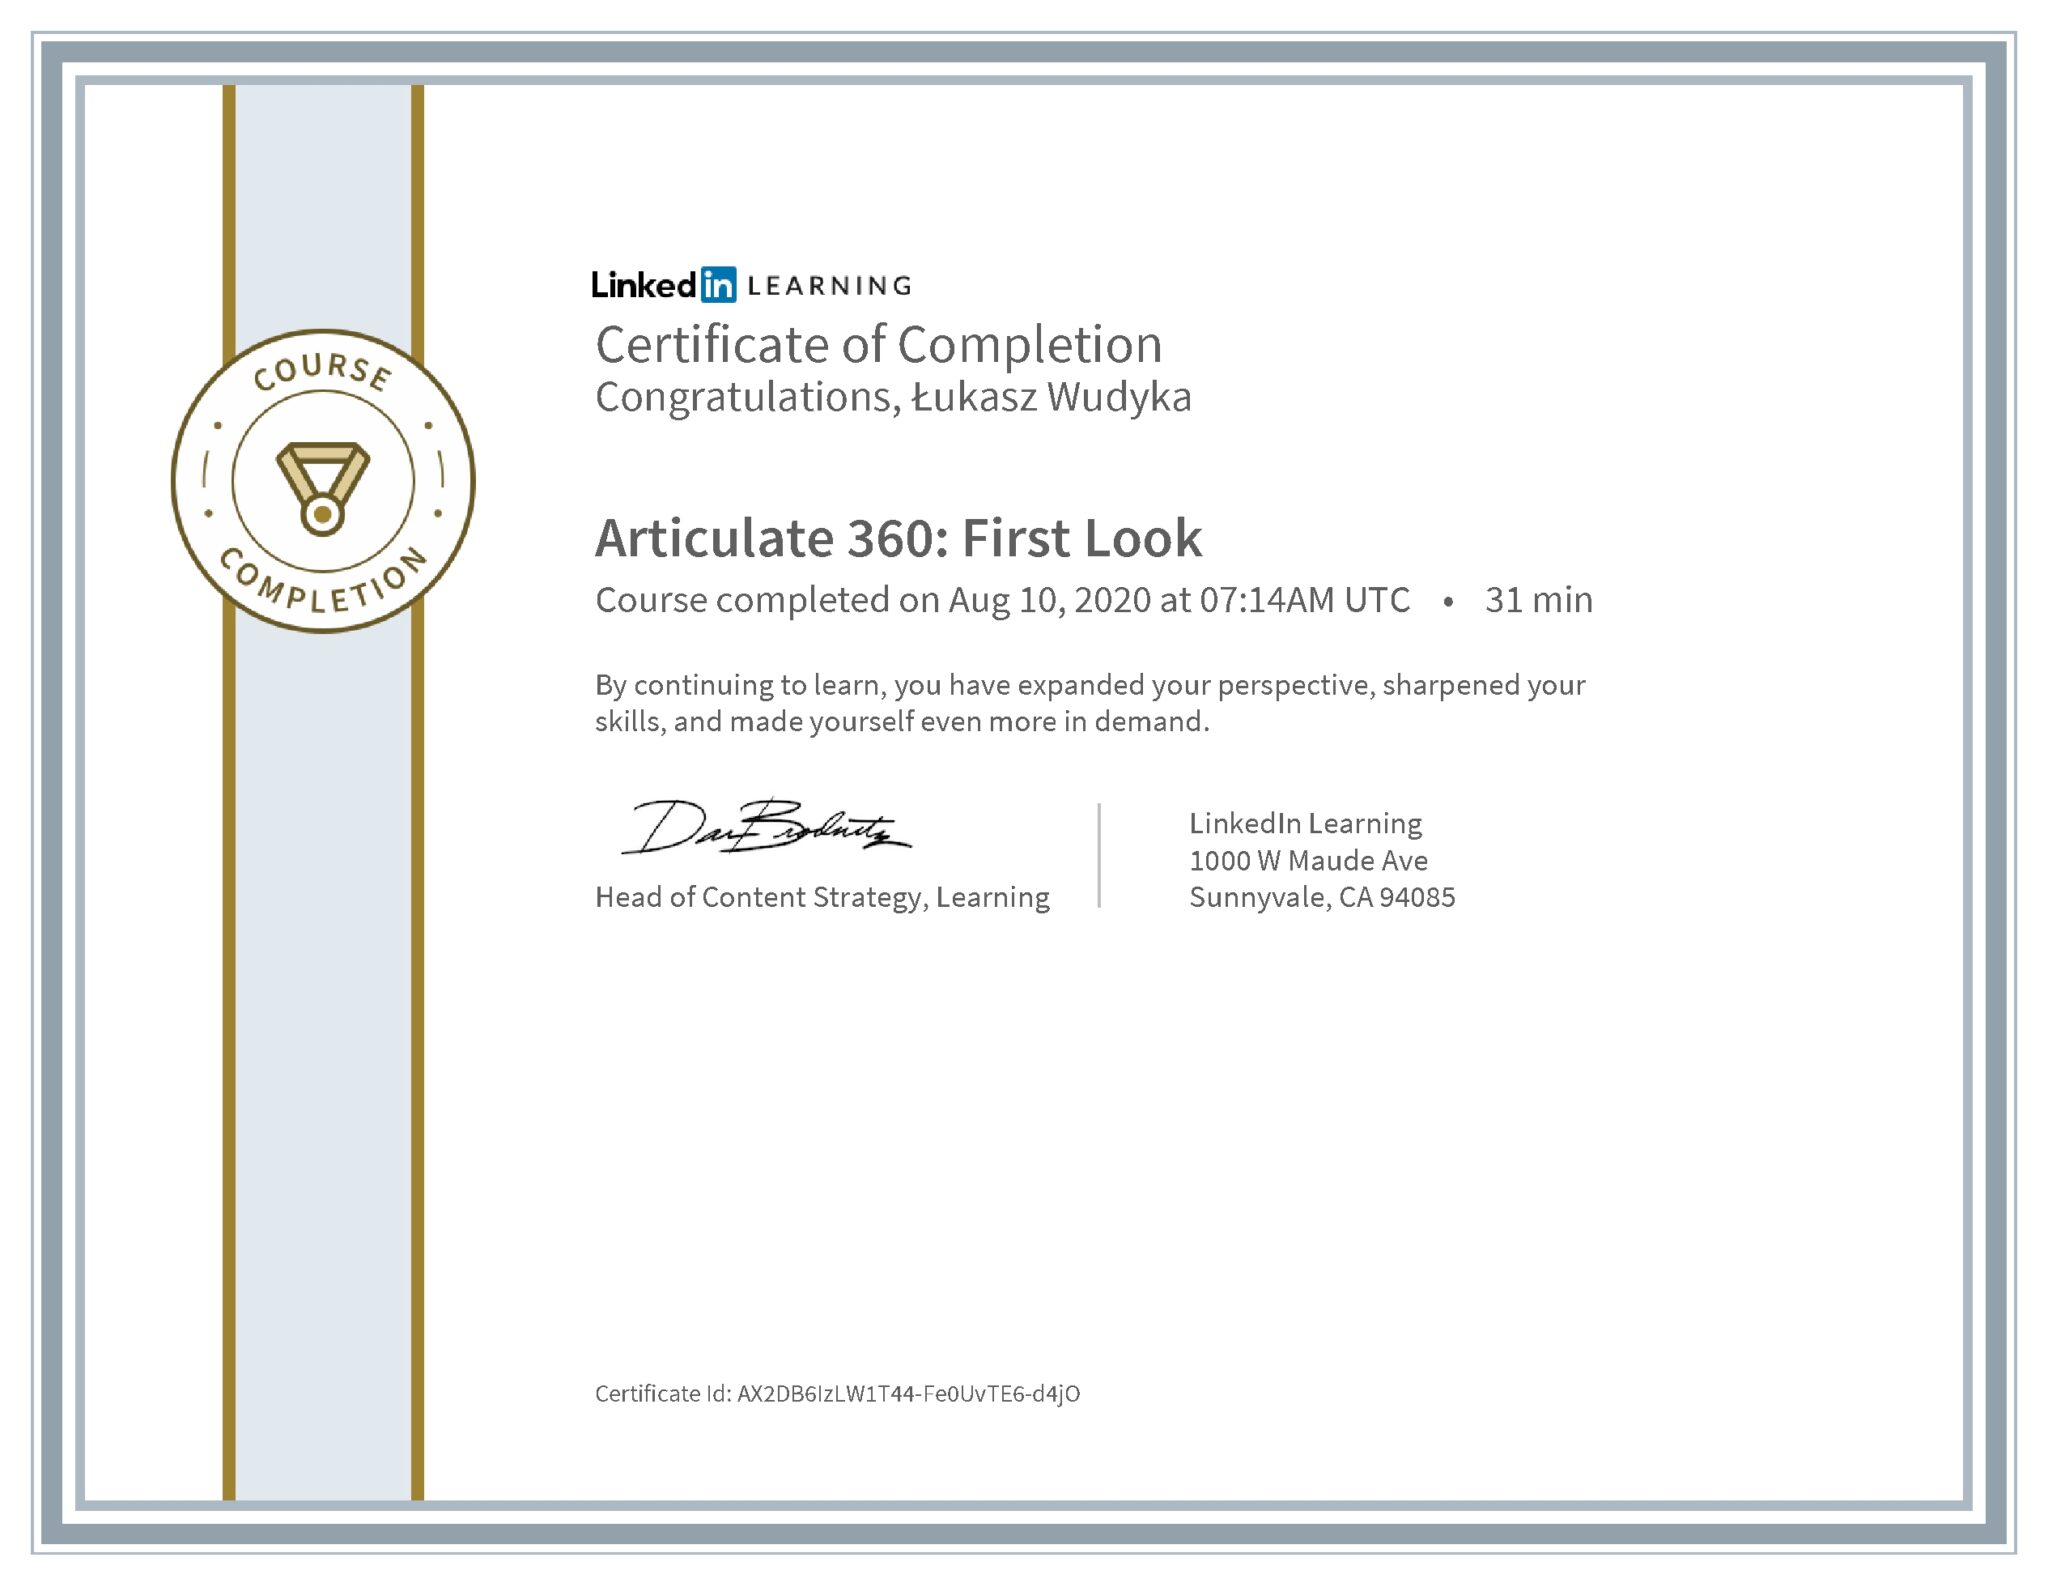 Łukasz Wudyka certyfikat LinkedIn Articulate 360: First Look